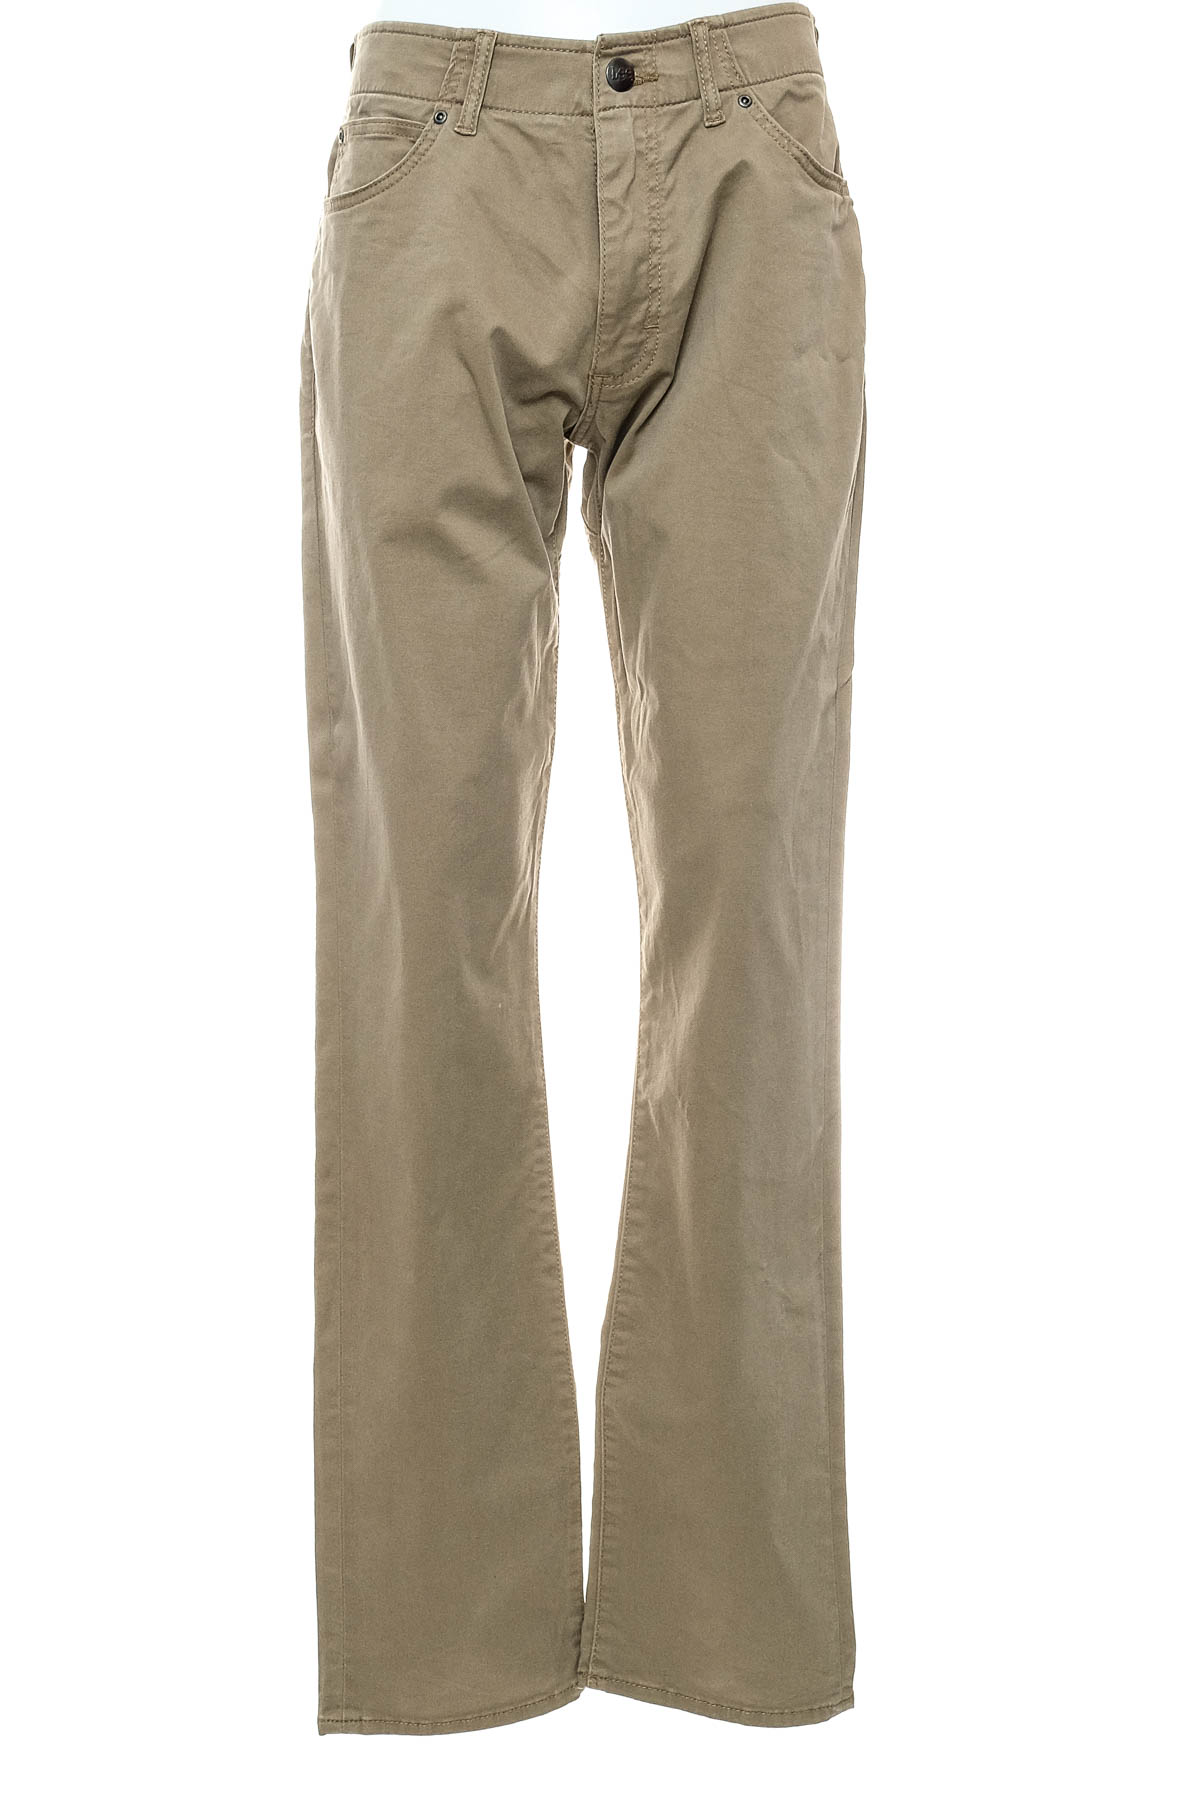 Men's trousers - Lee - 0